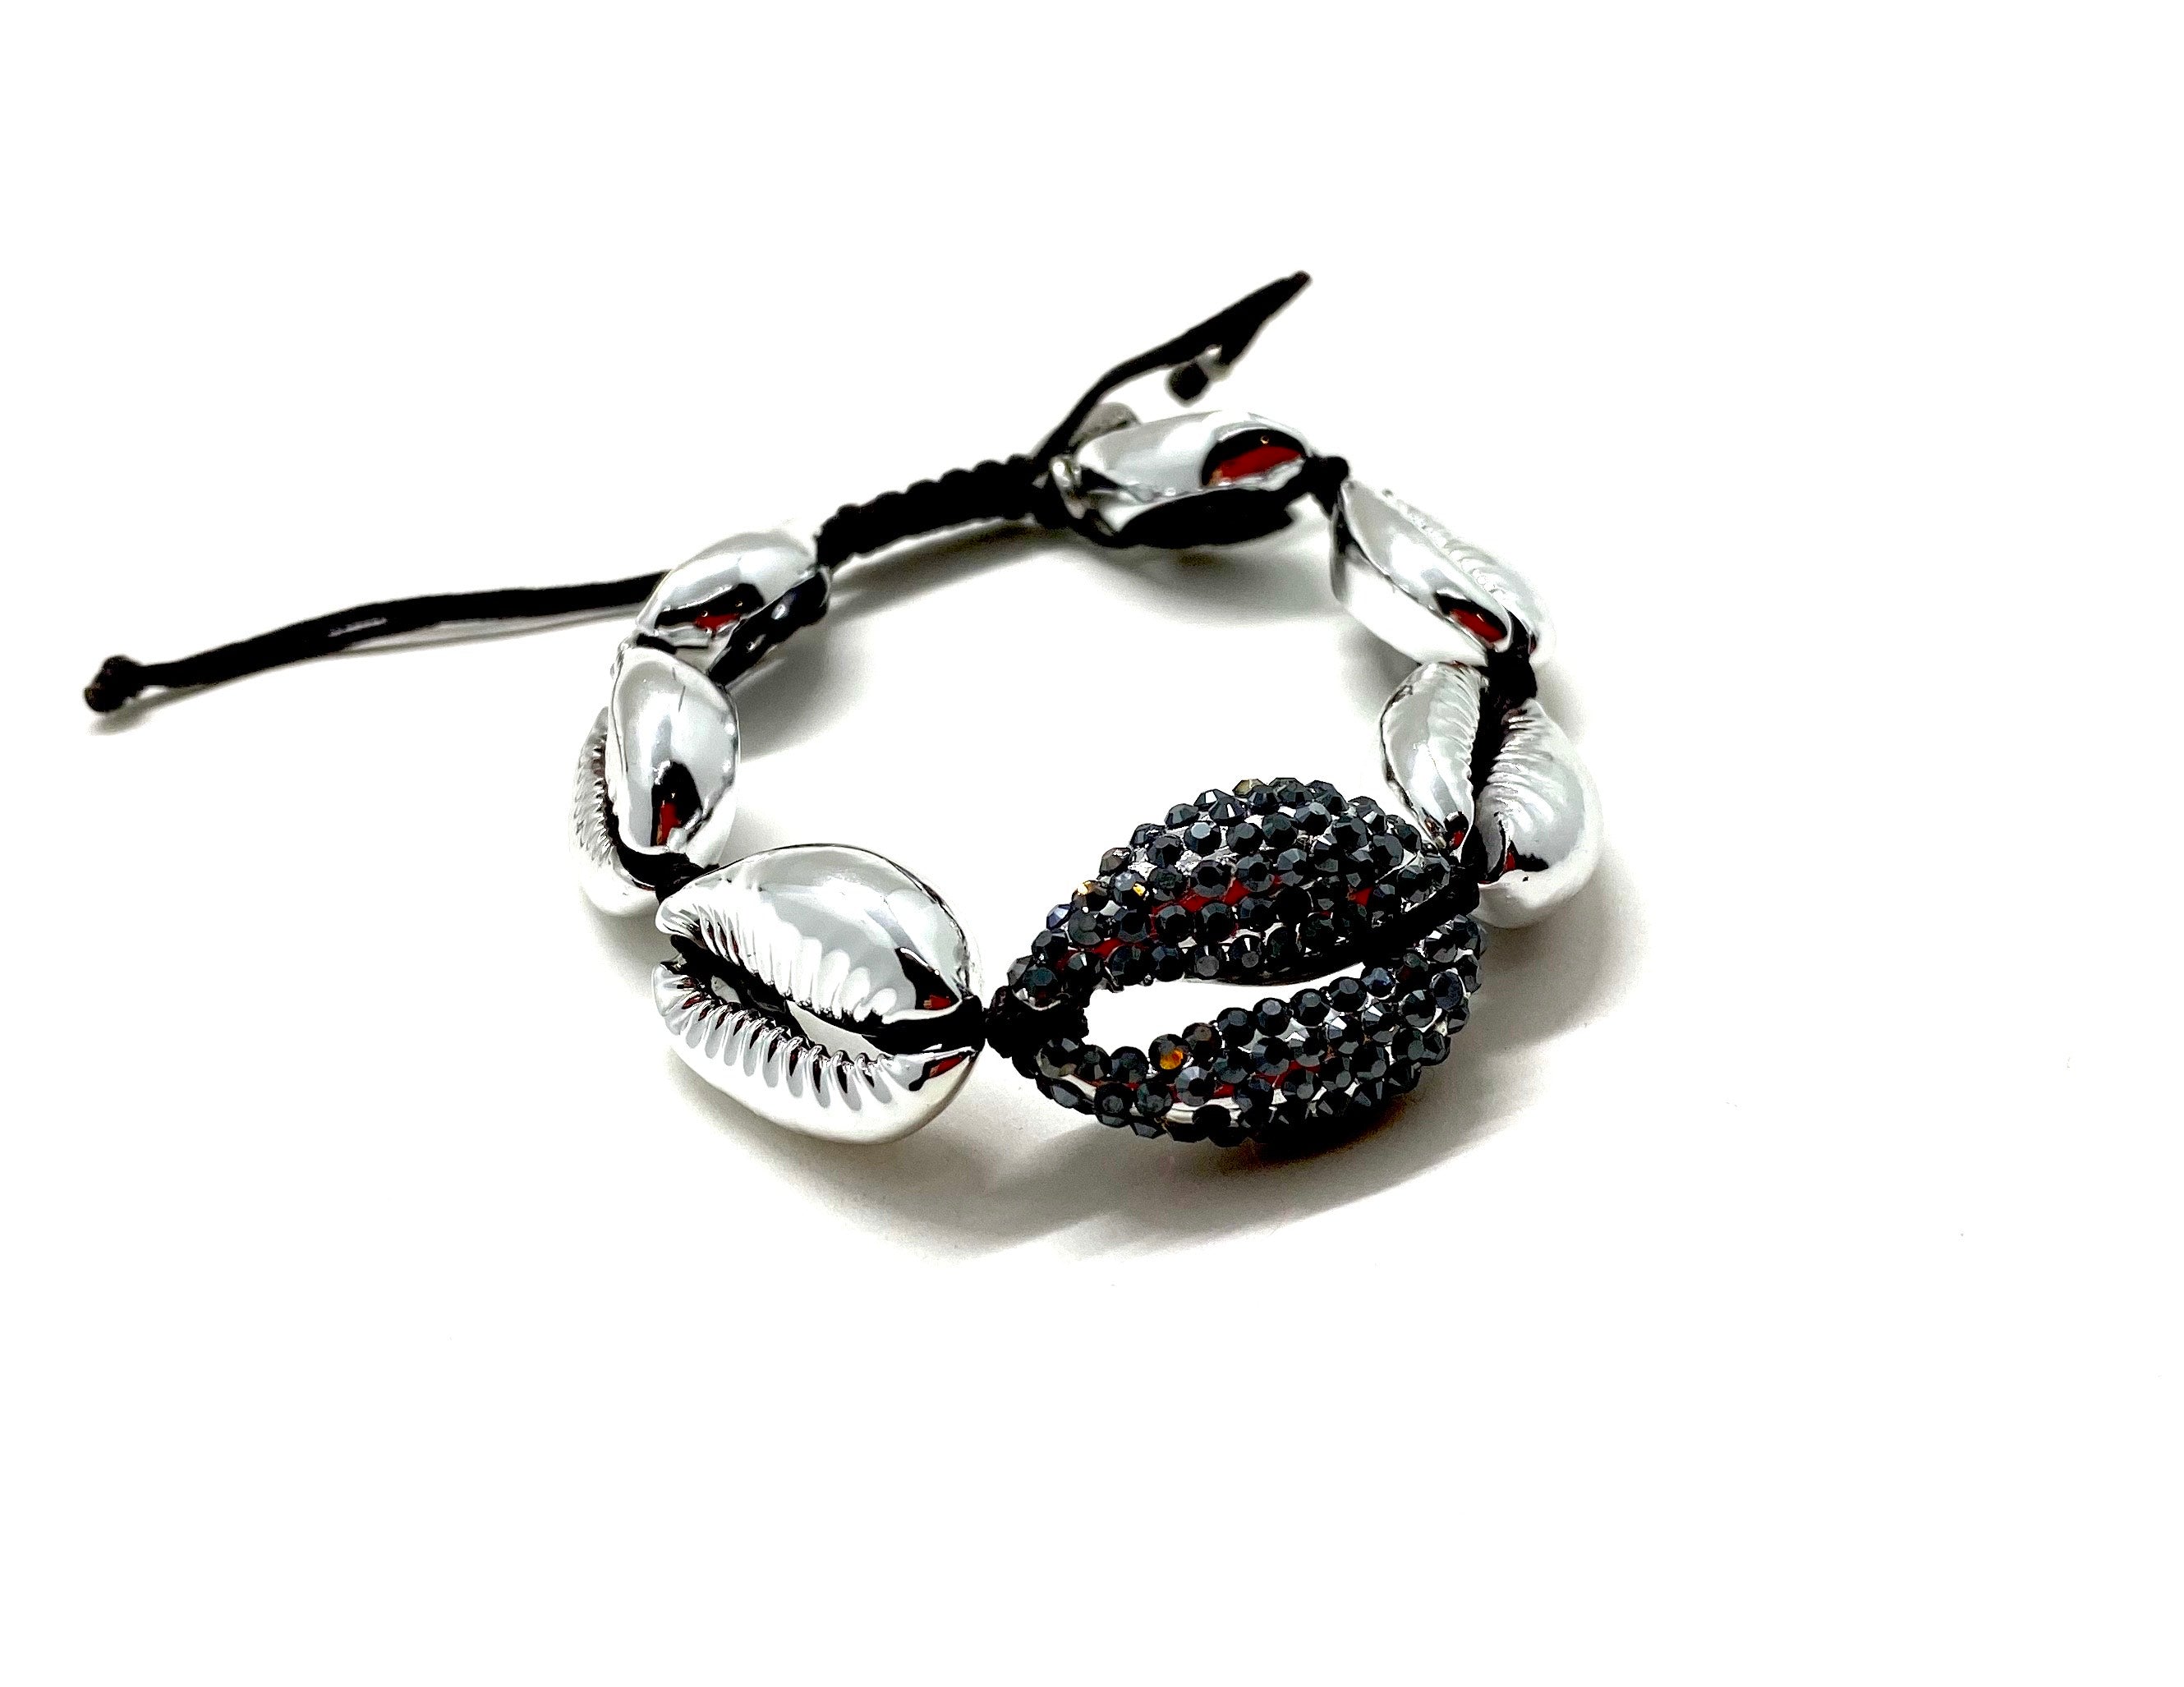 Silver shell bracelet, with hematite Swarovski studded central shell, and black cord